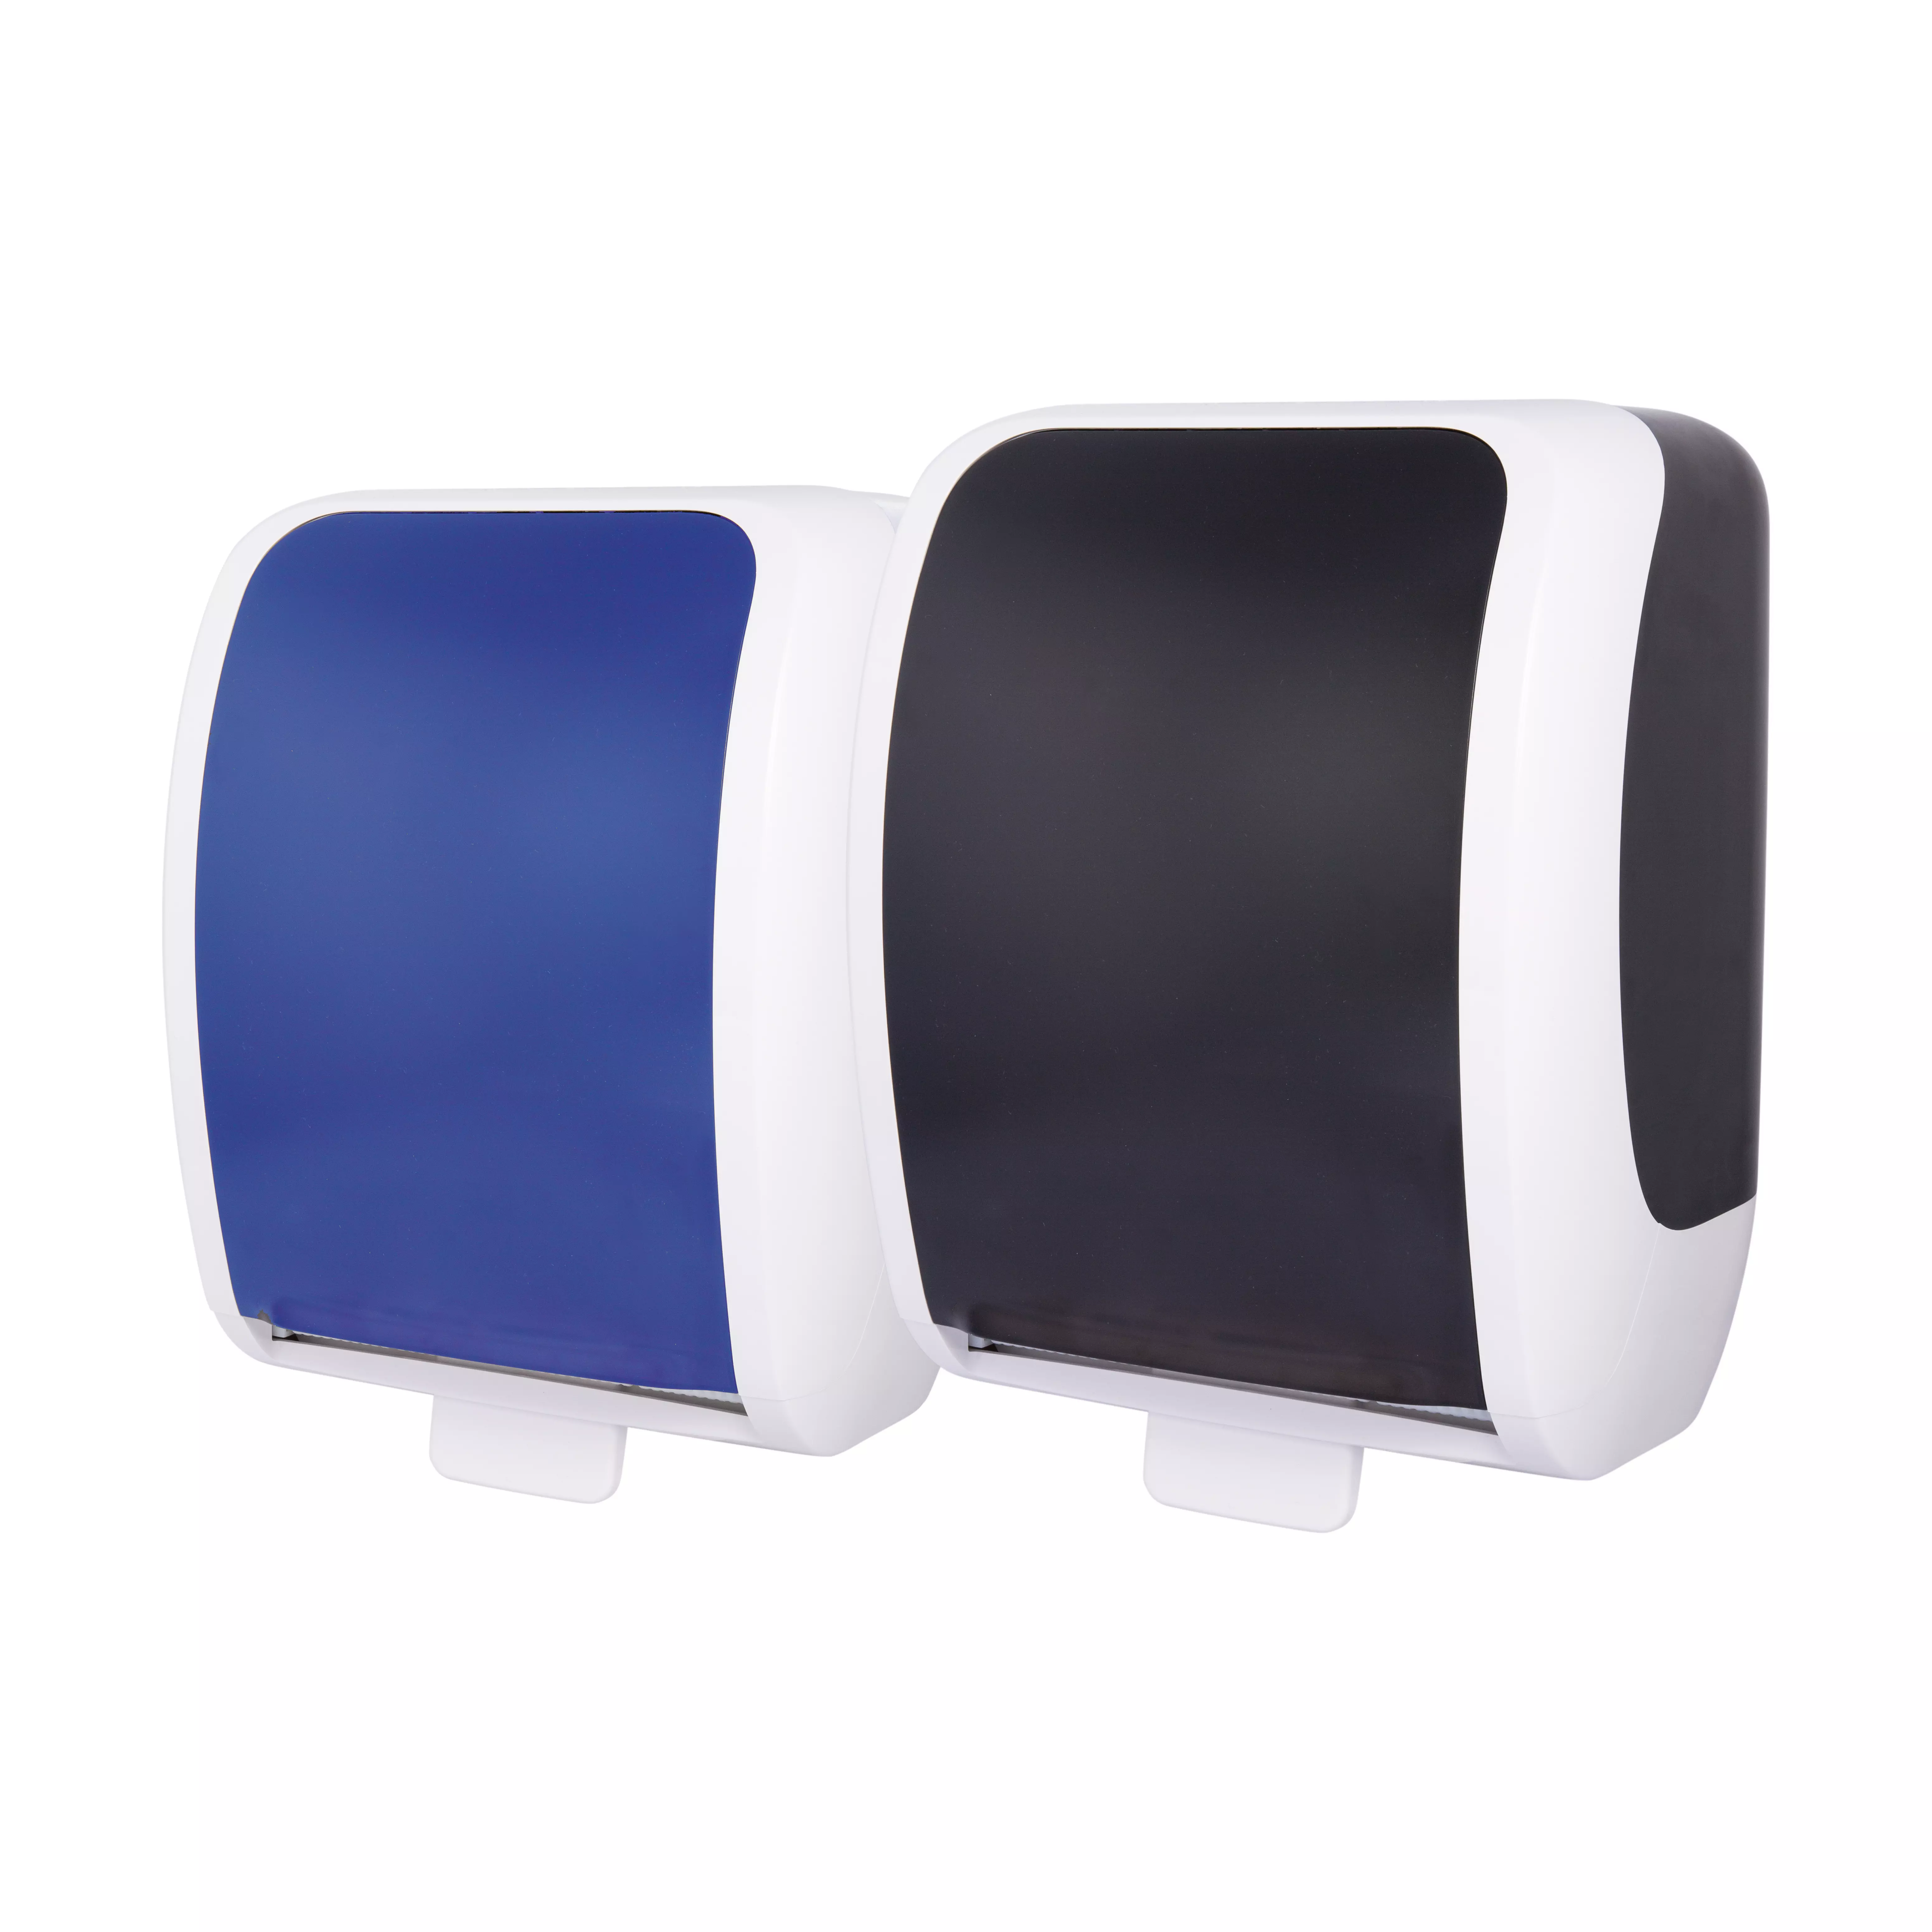 RATIO towel dispenser - blue